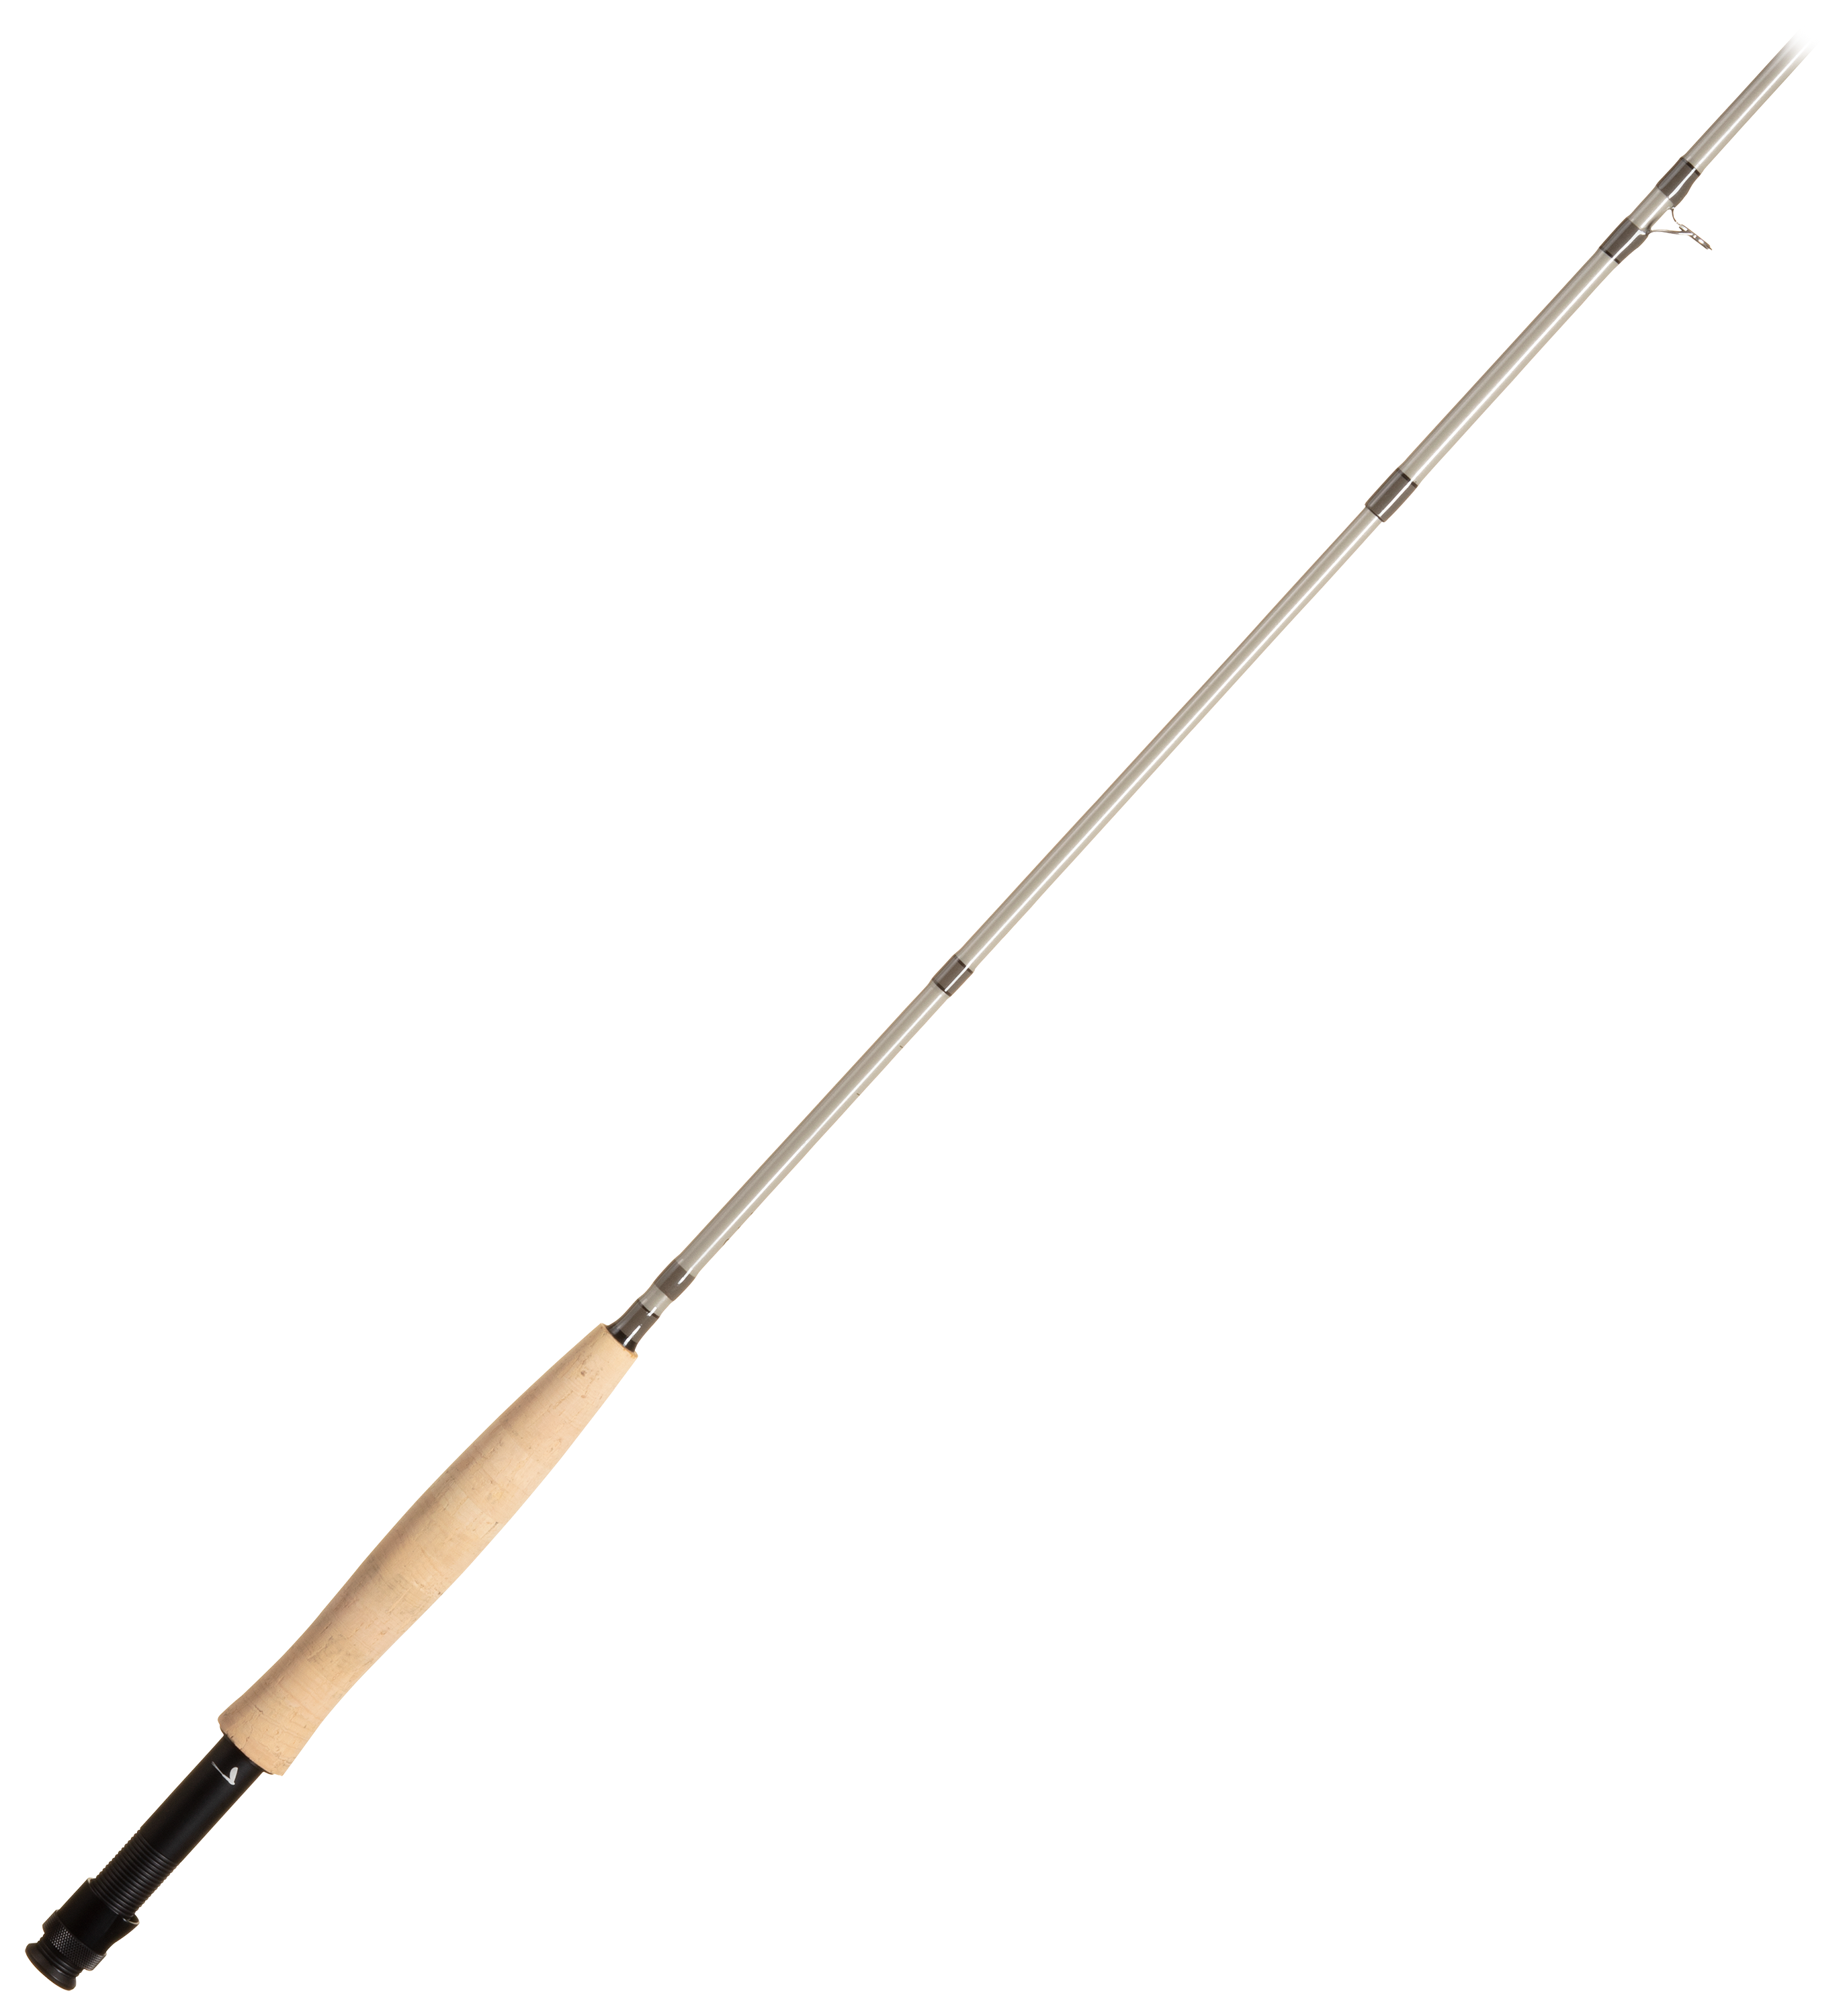 Cabela's Bighorn Fly Rod - 4 - 8'